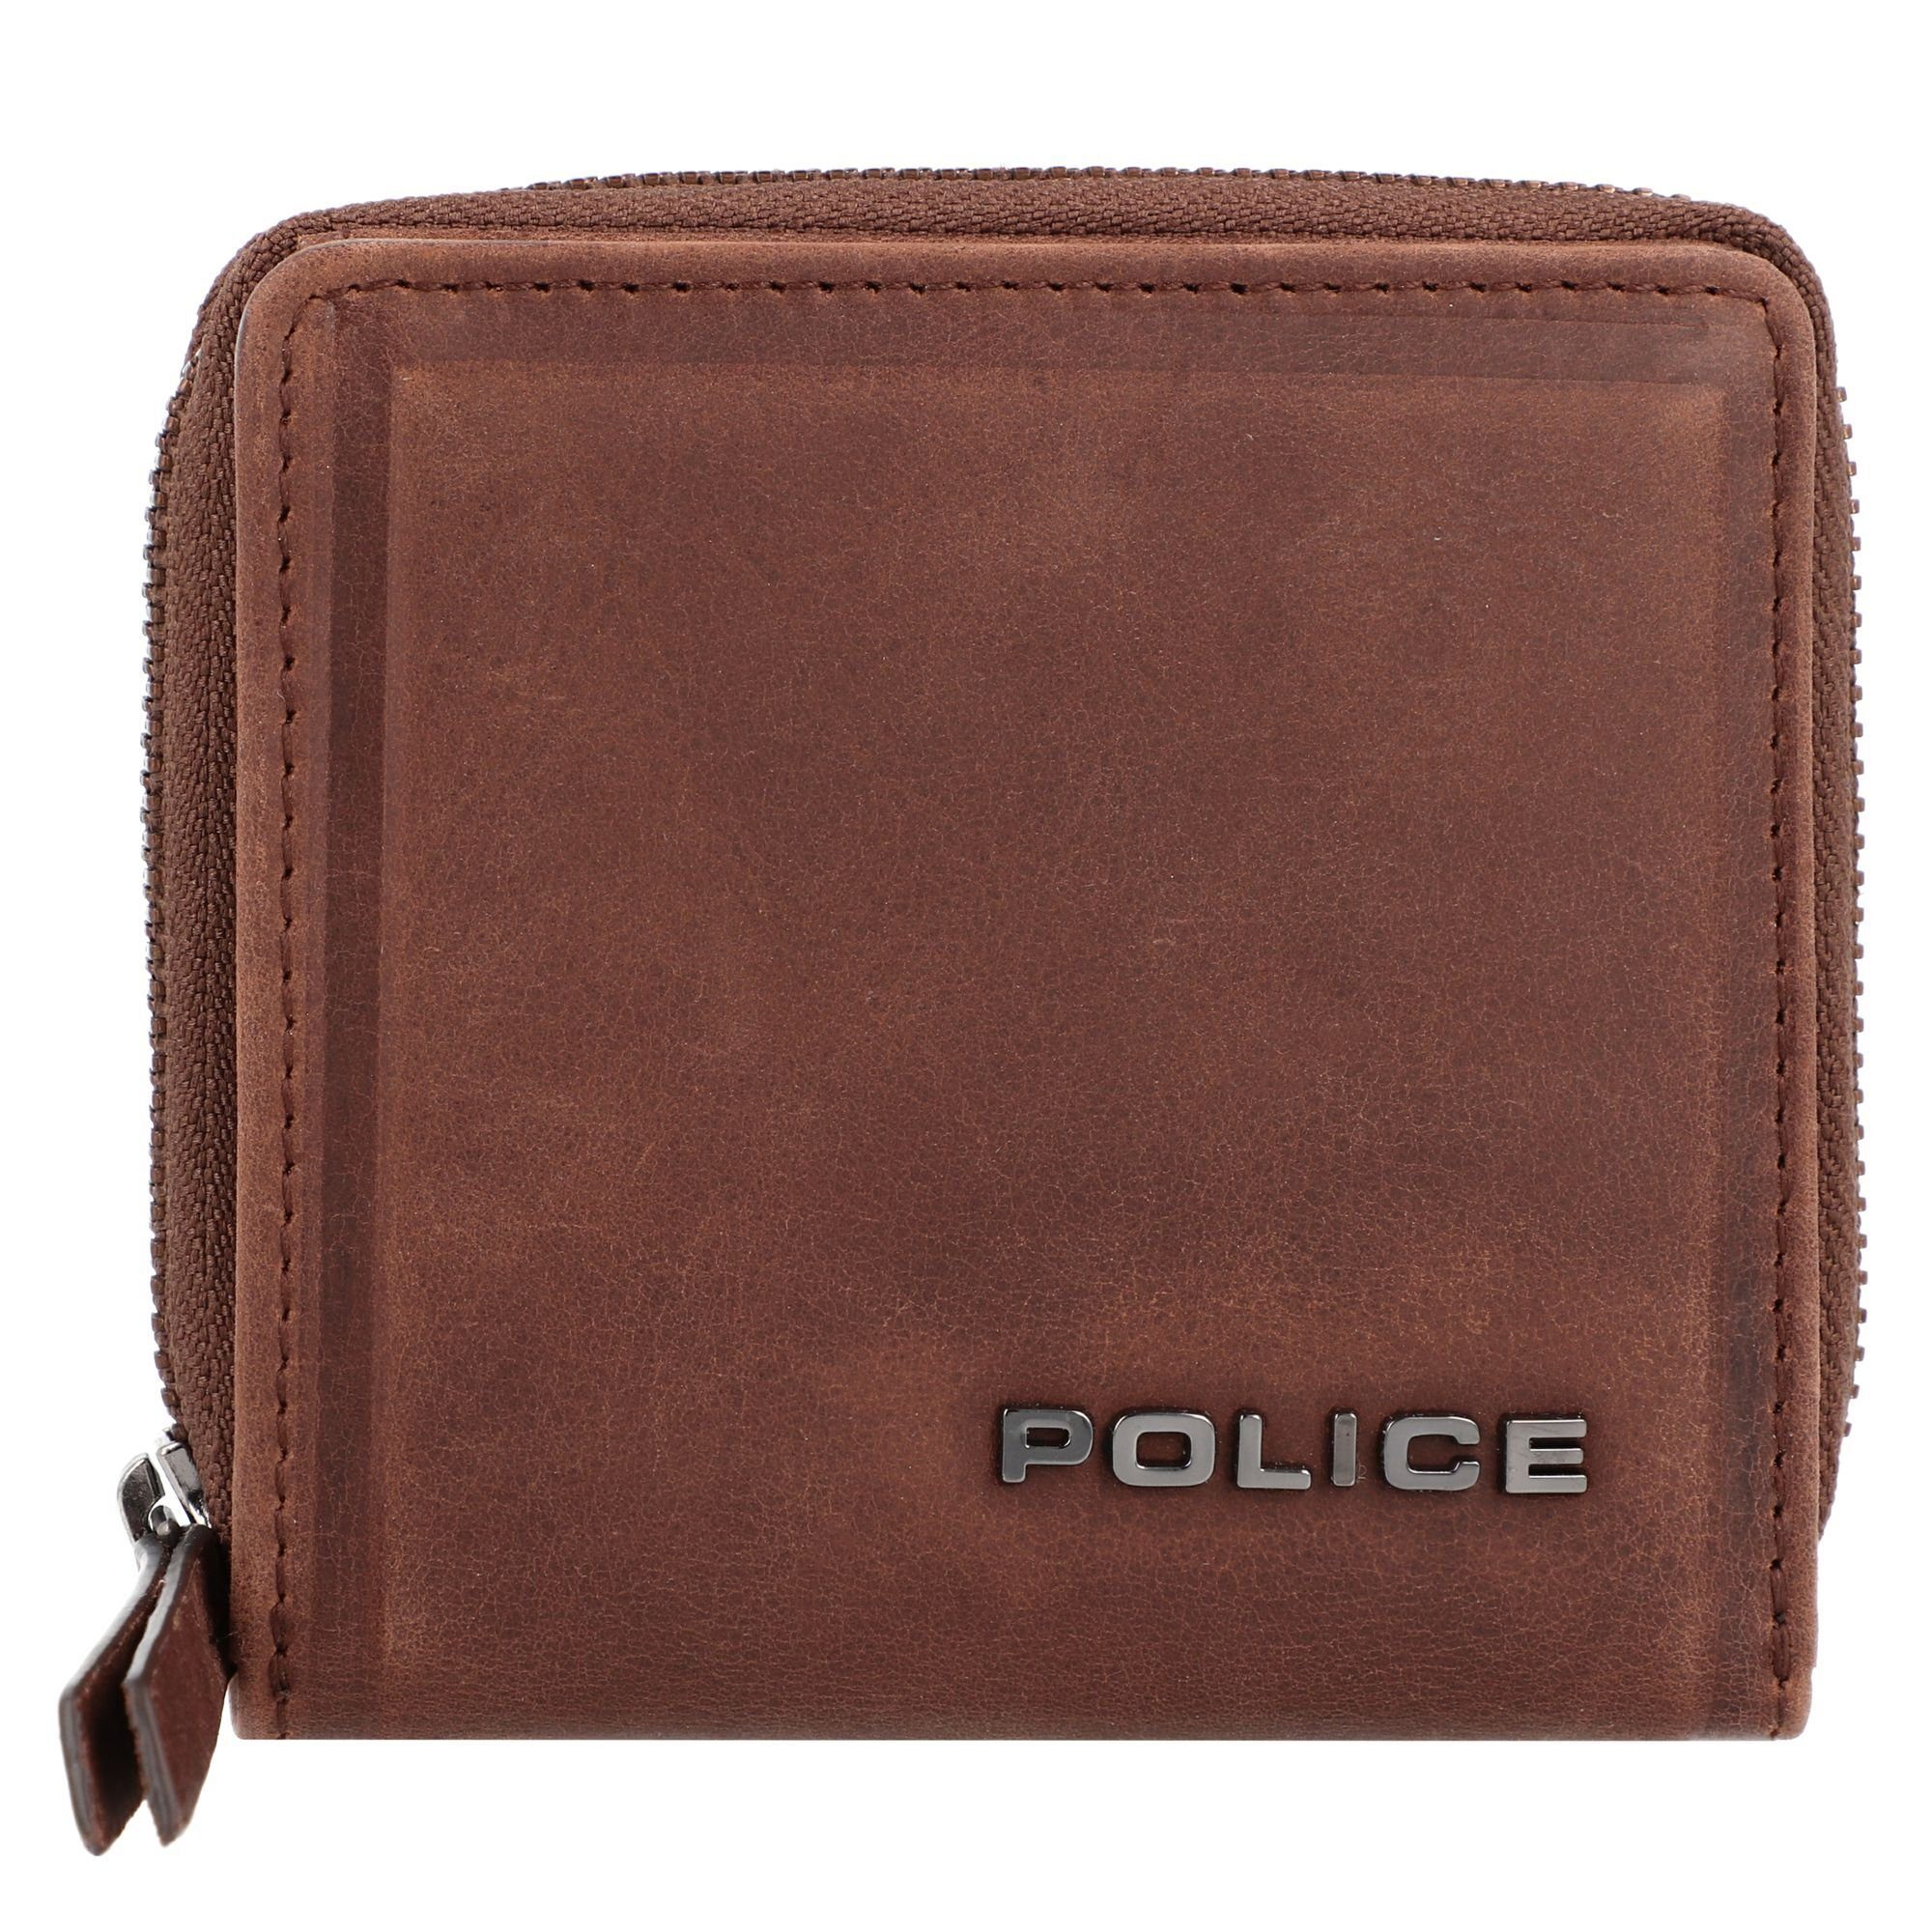 Police Geldbörse, Leder brown